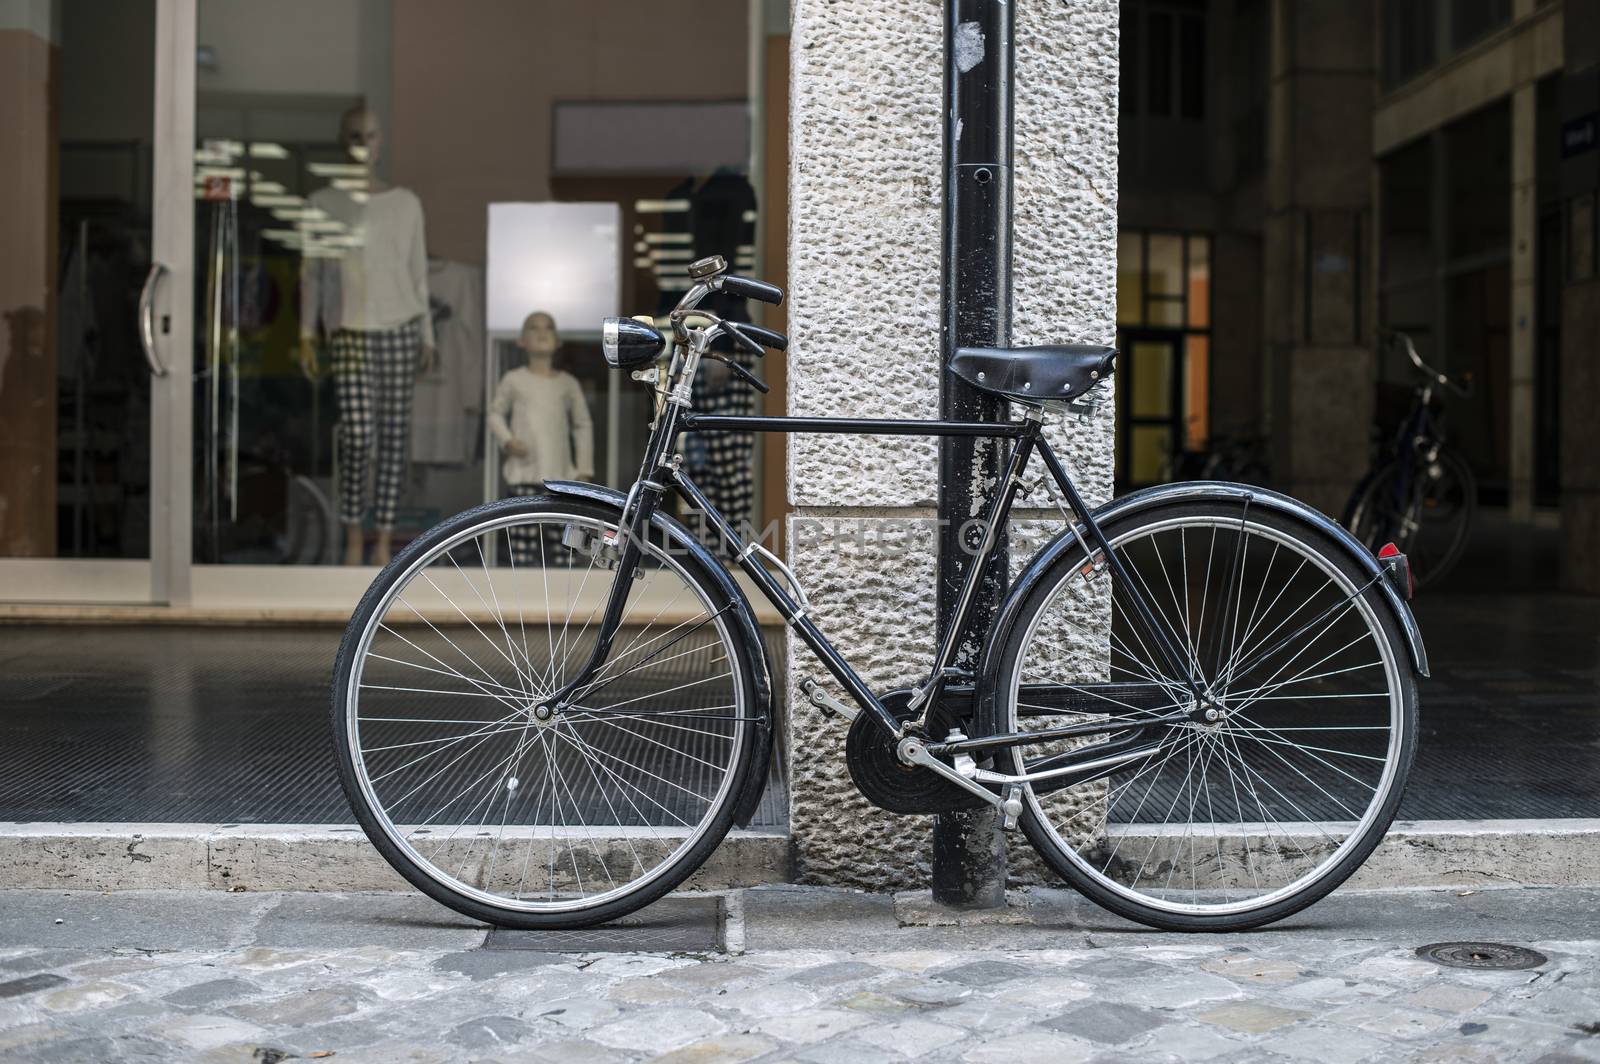 Black bike in front of fashion shop on italian street. Typical italian style.